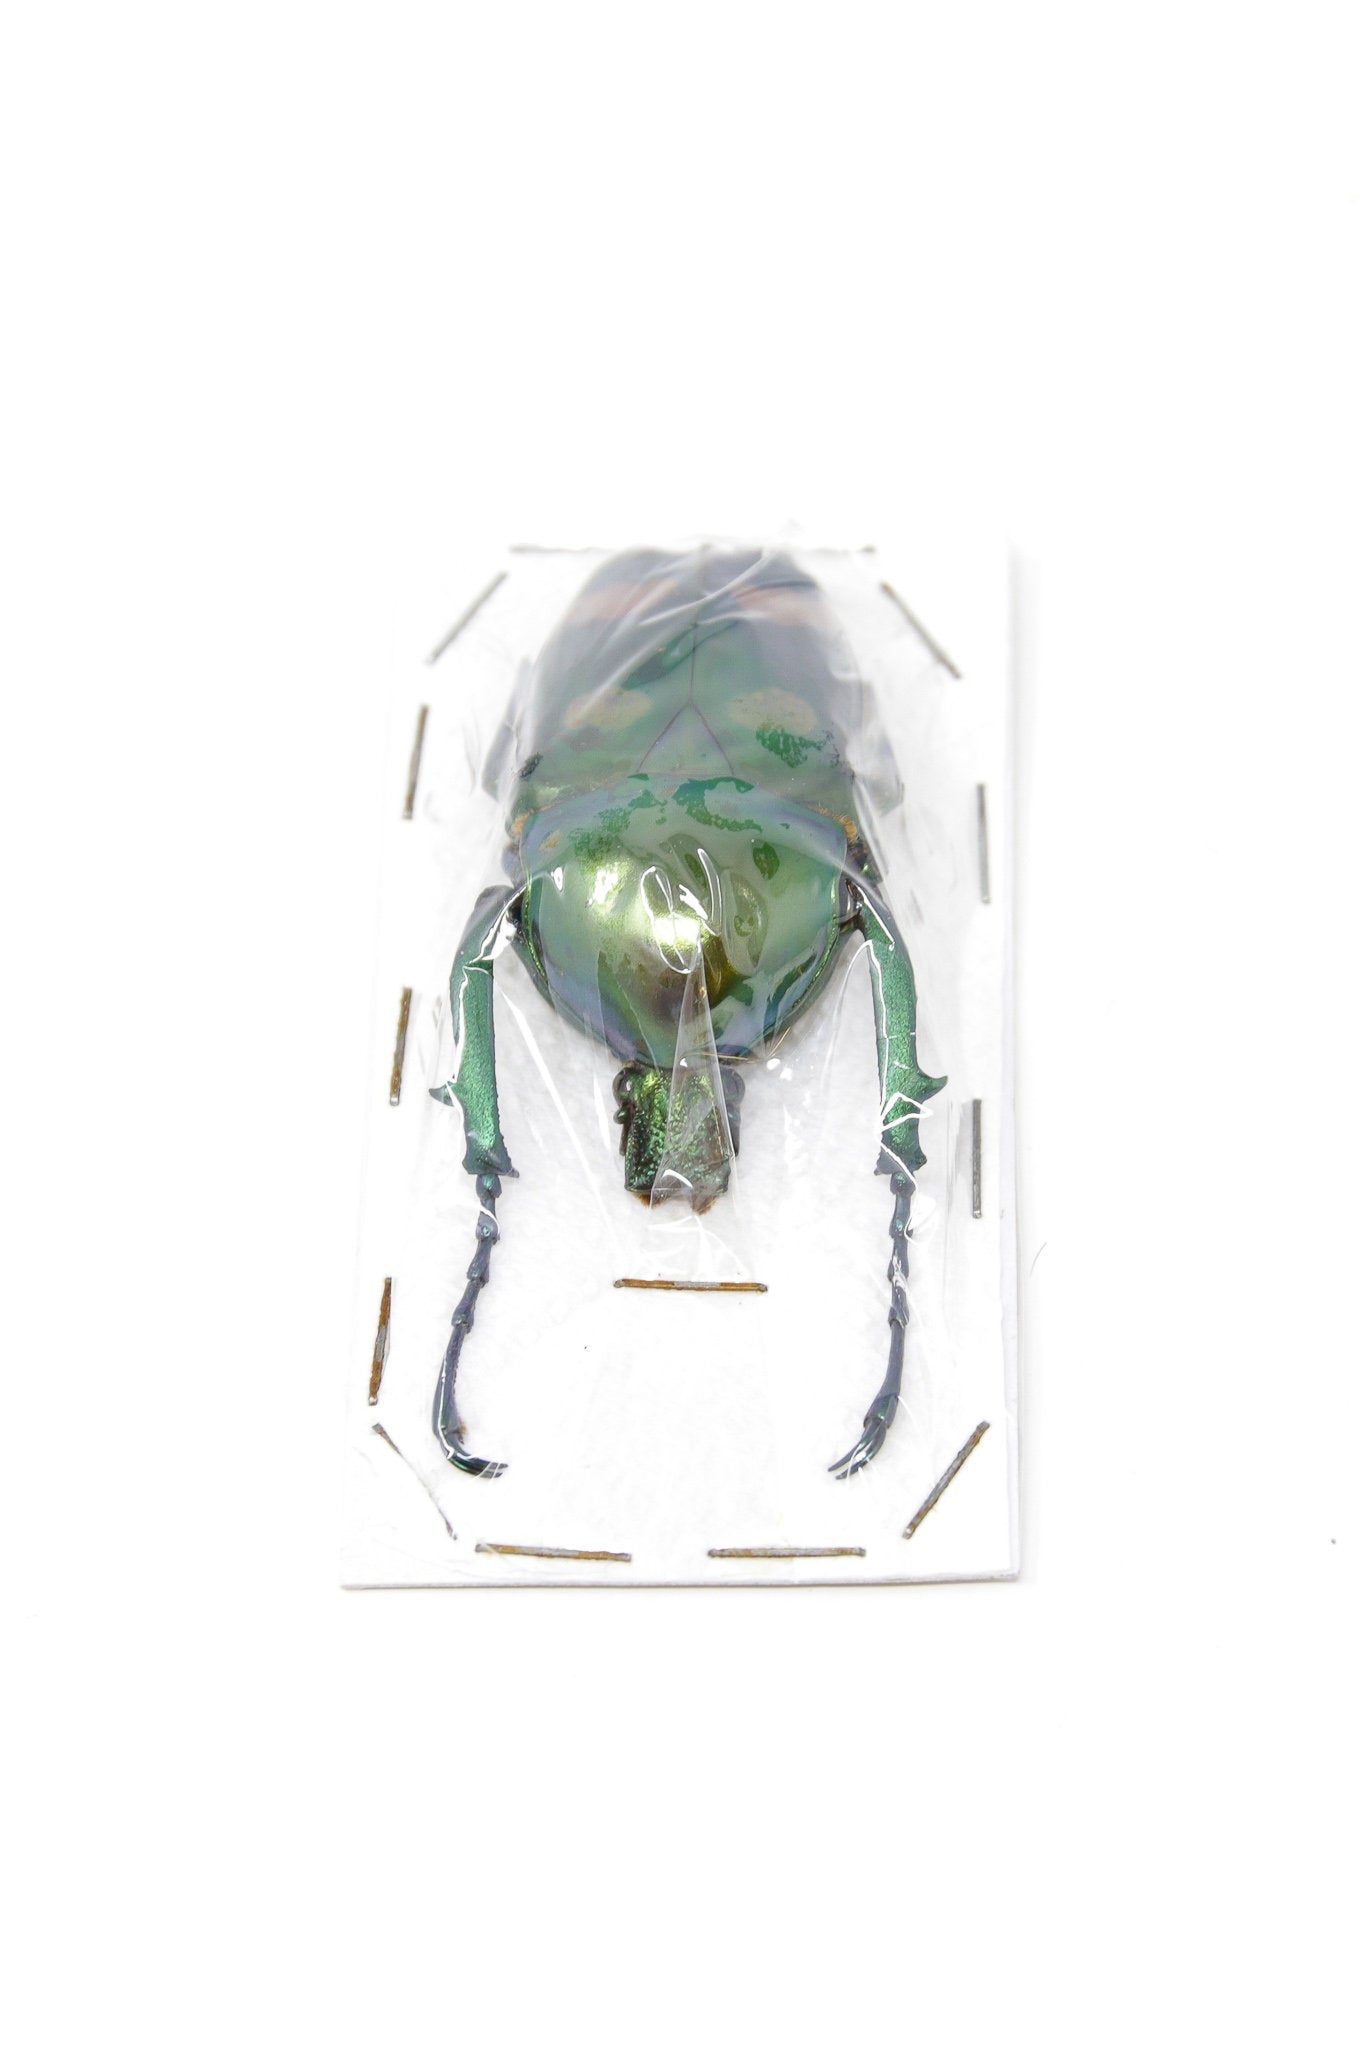 Jumnos ruckeri ruckeri 49.8mm A1 | Thailand Flower Beetle, Entomology Specimen